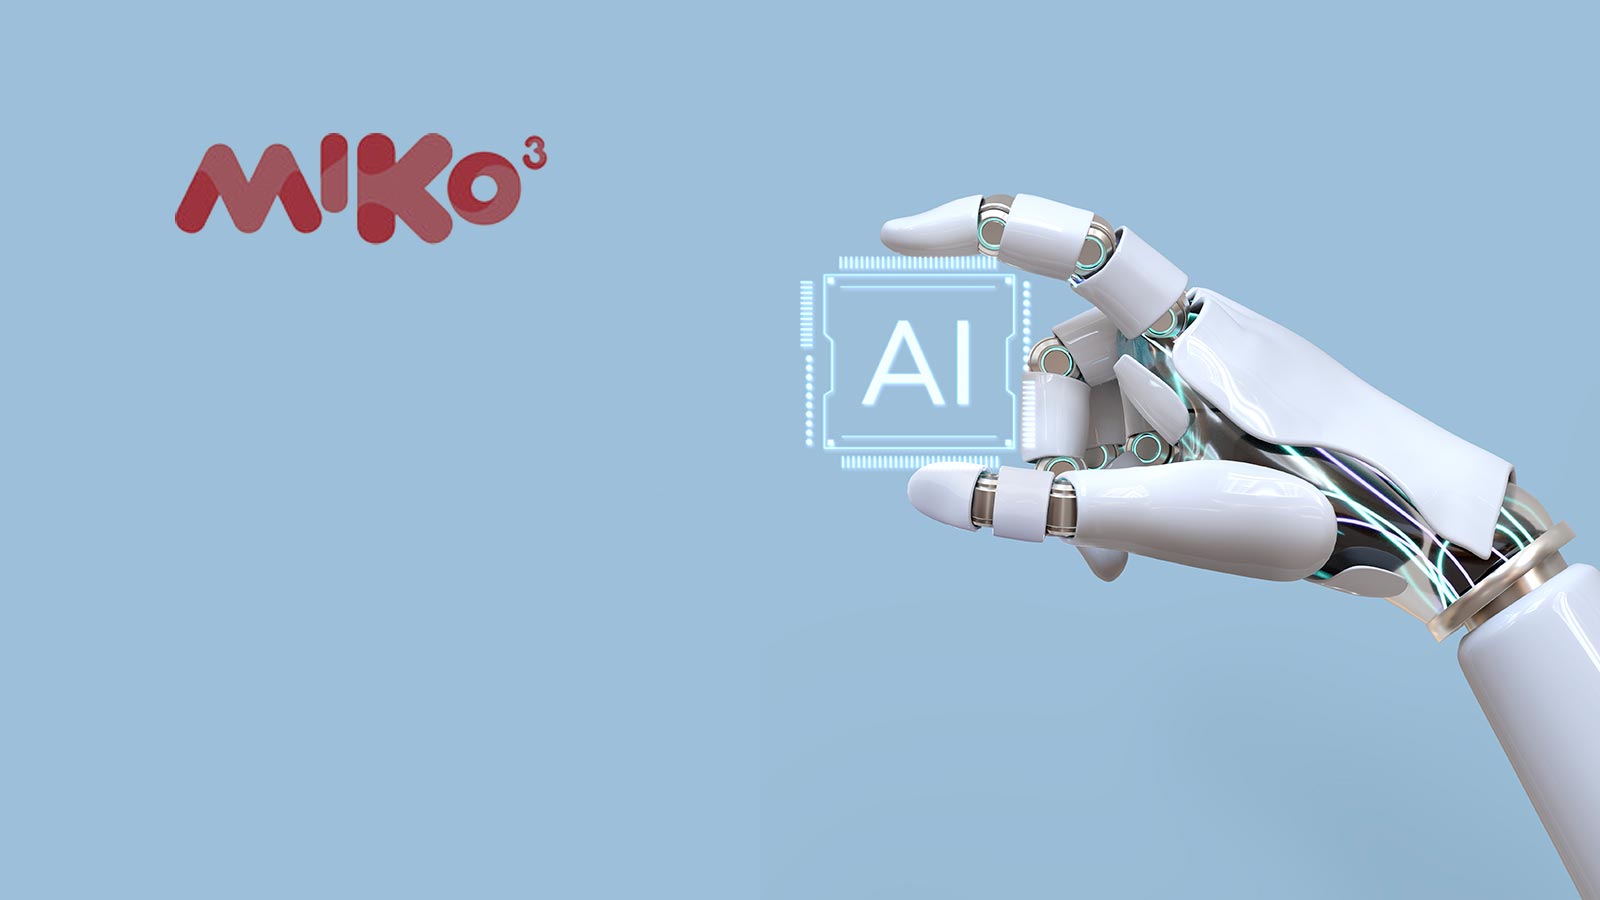 Miko 3 - Artificial Intelligence Robot